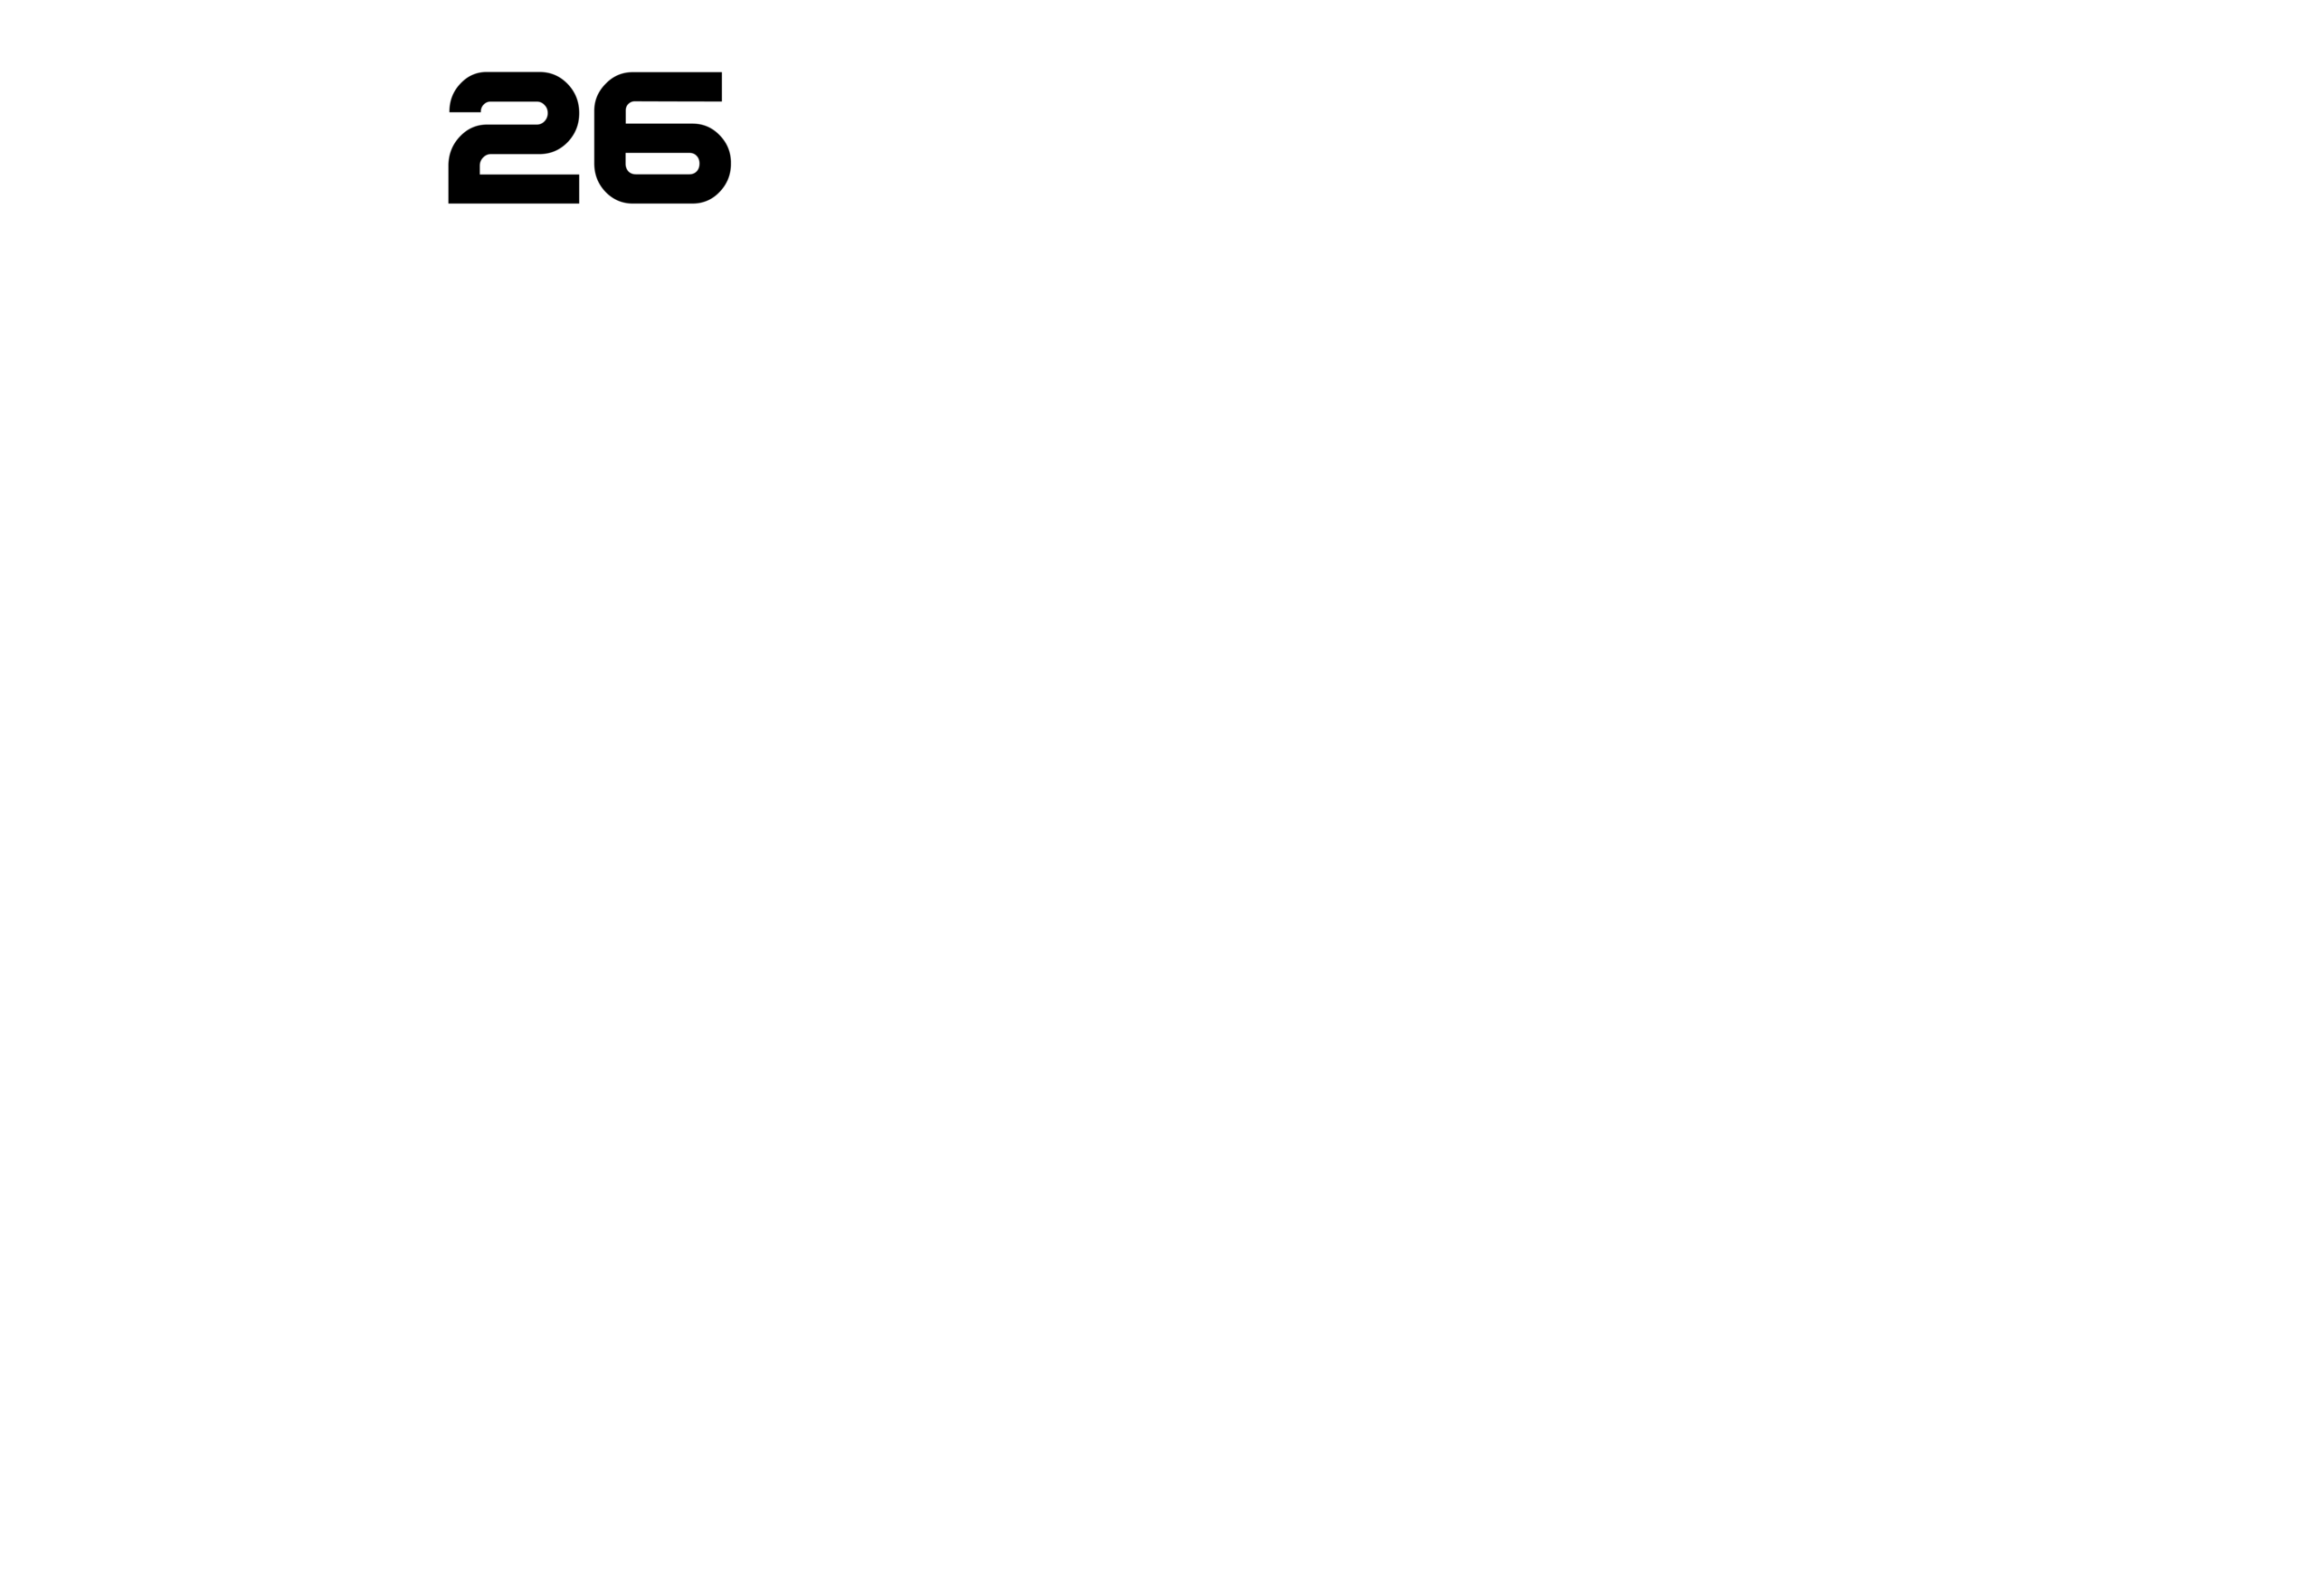 Roberts Vitols 26 logo